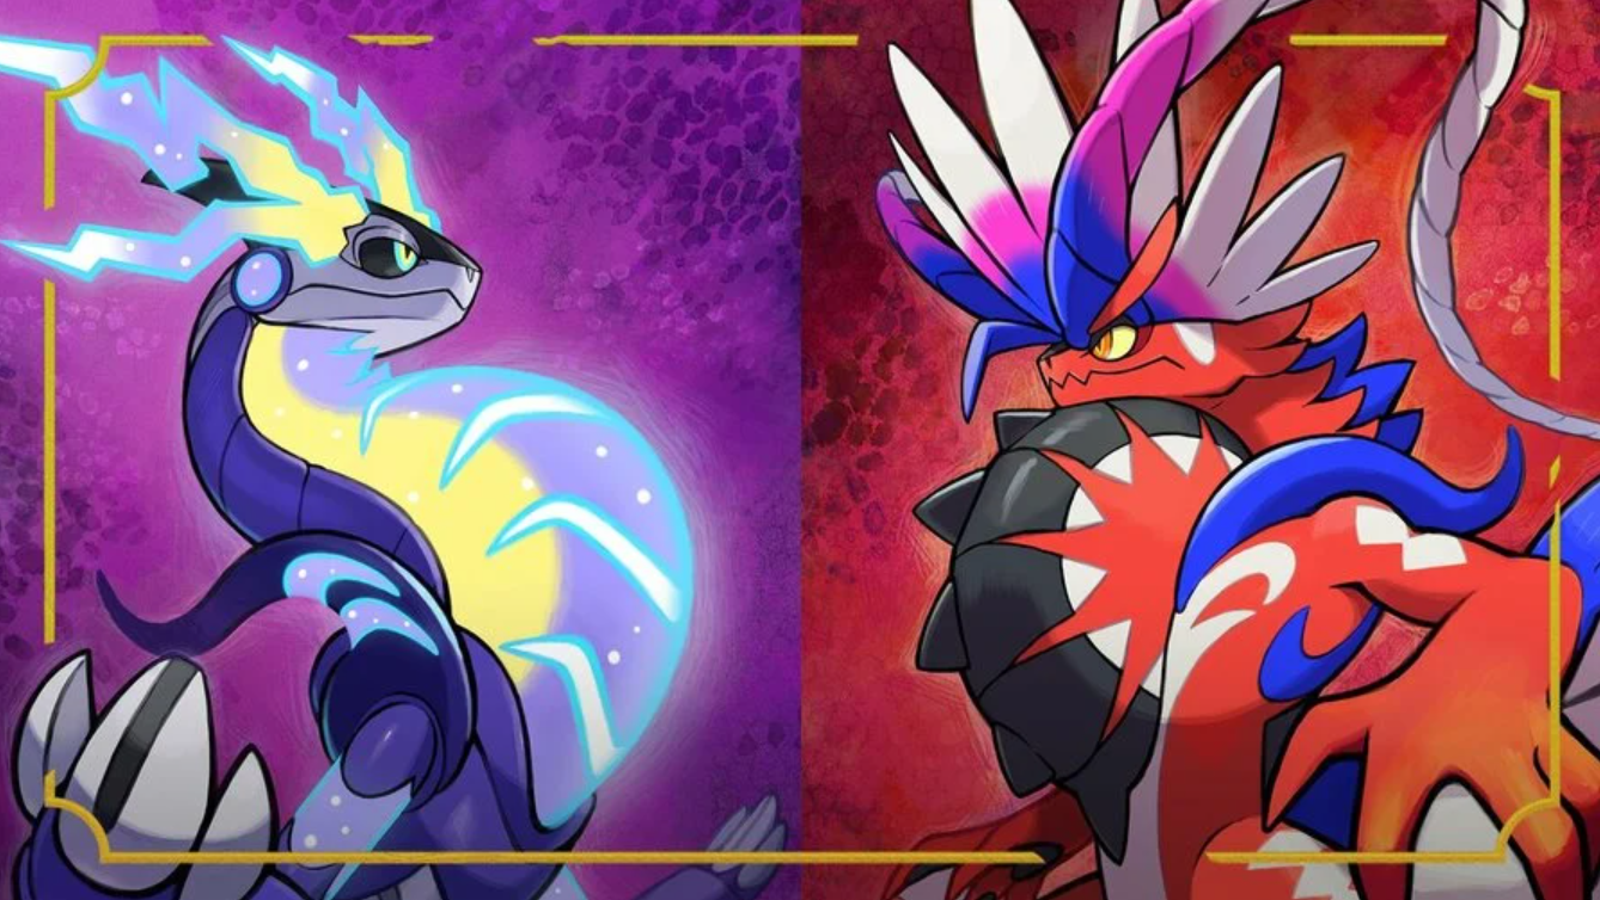 Pokémon Sword/Shield Characters - Giant Bomb